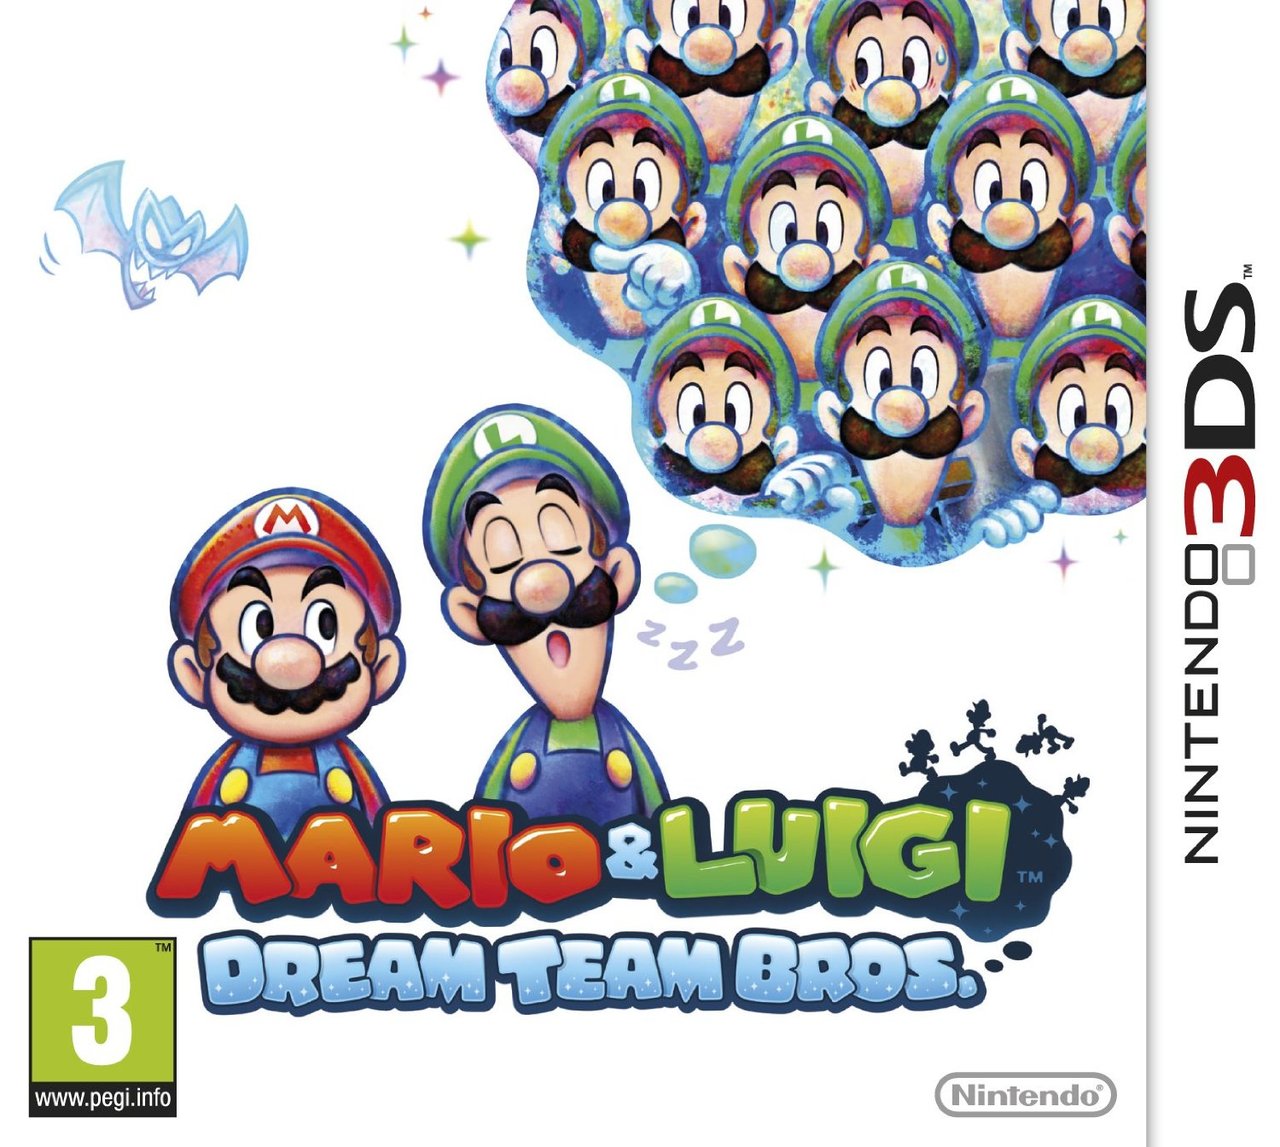 jaquette du jeu vidéo Mario & Luigi : Dream Team Bros.